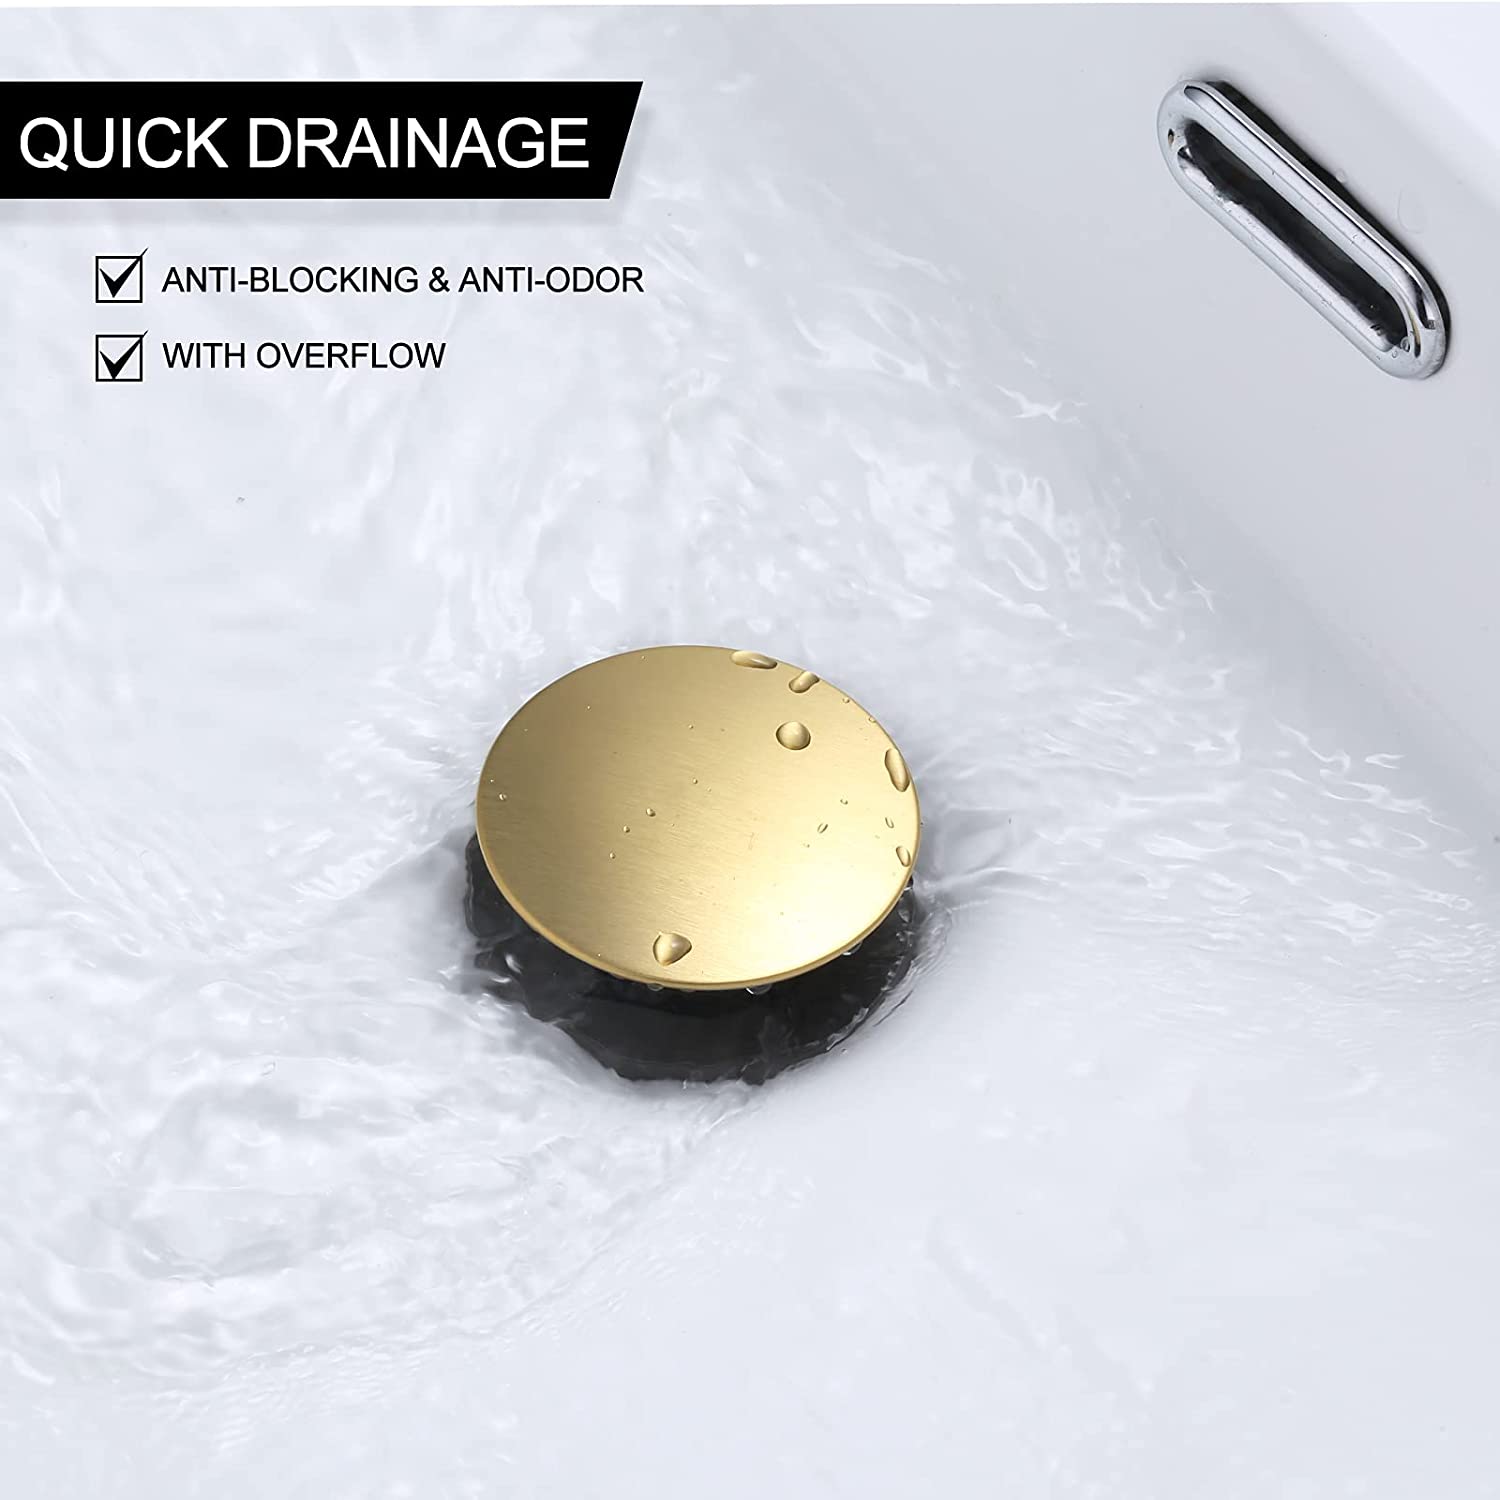 wowow brushed gold bathroom pop up assembly drain stopper para sa bathroom sink ug rv sink nga adunay overflow 4